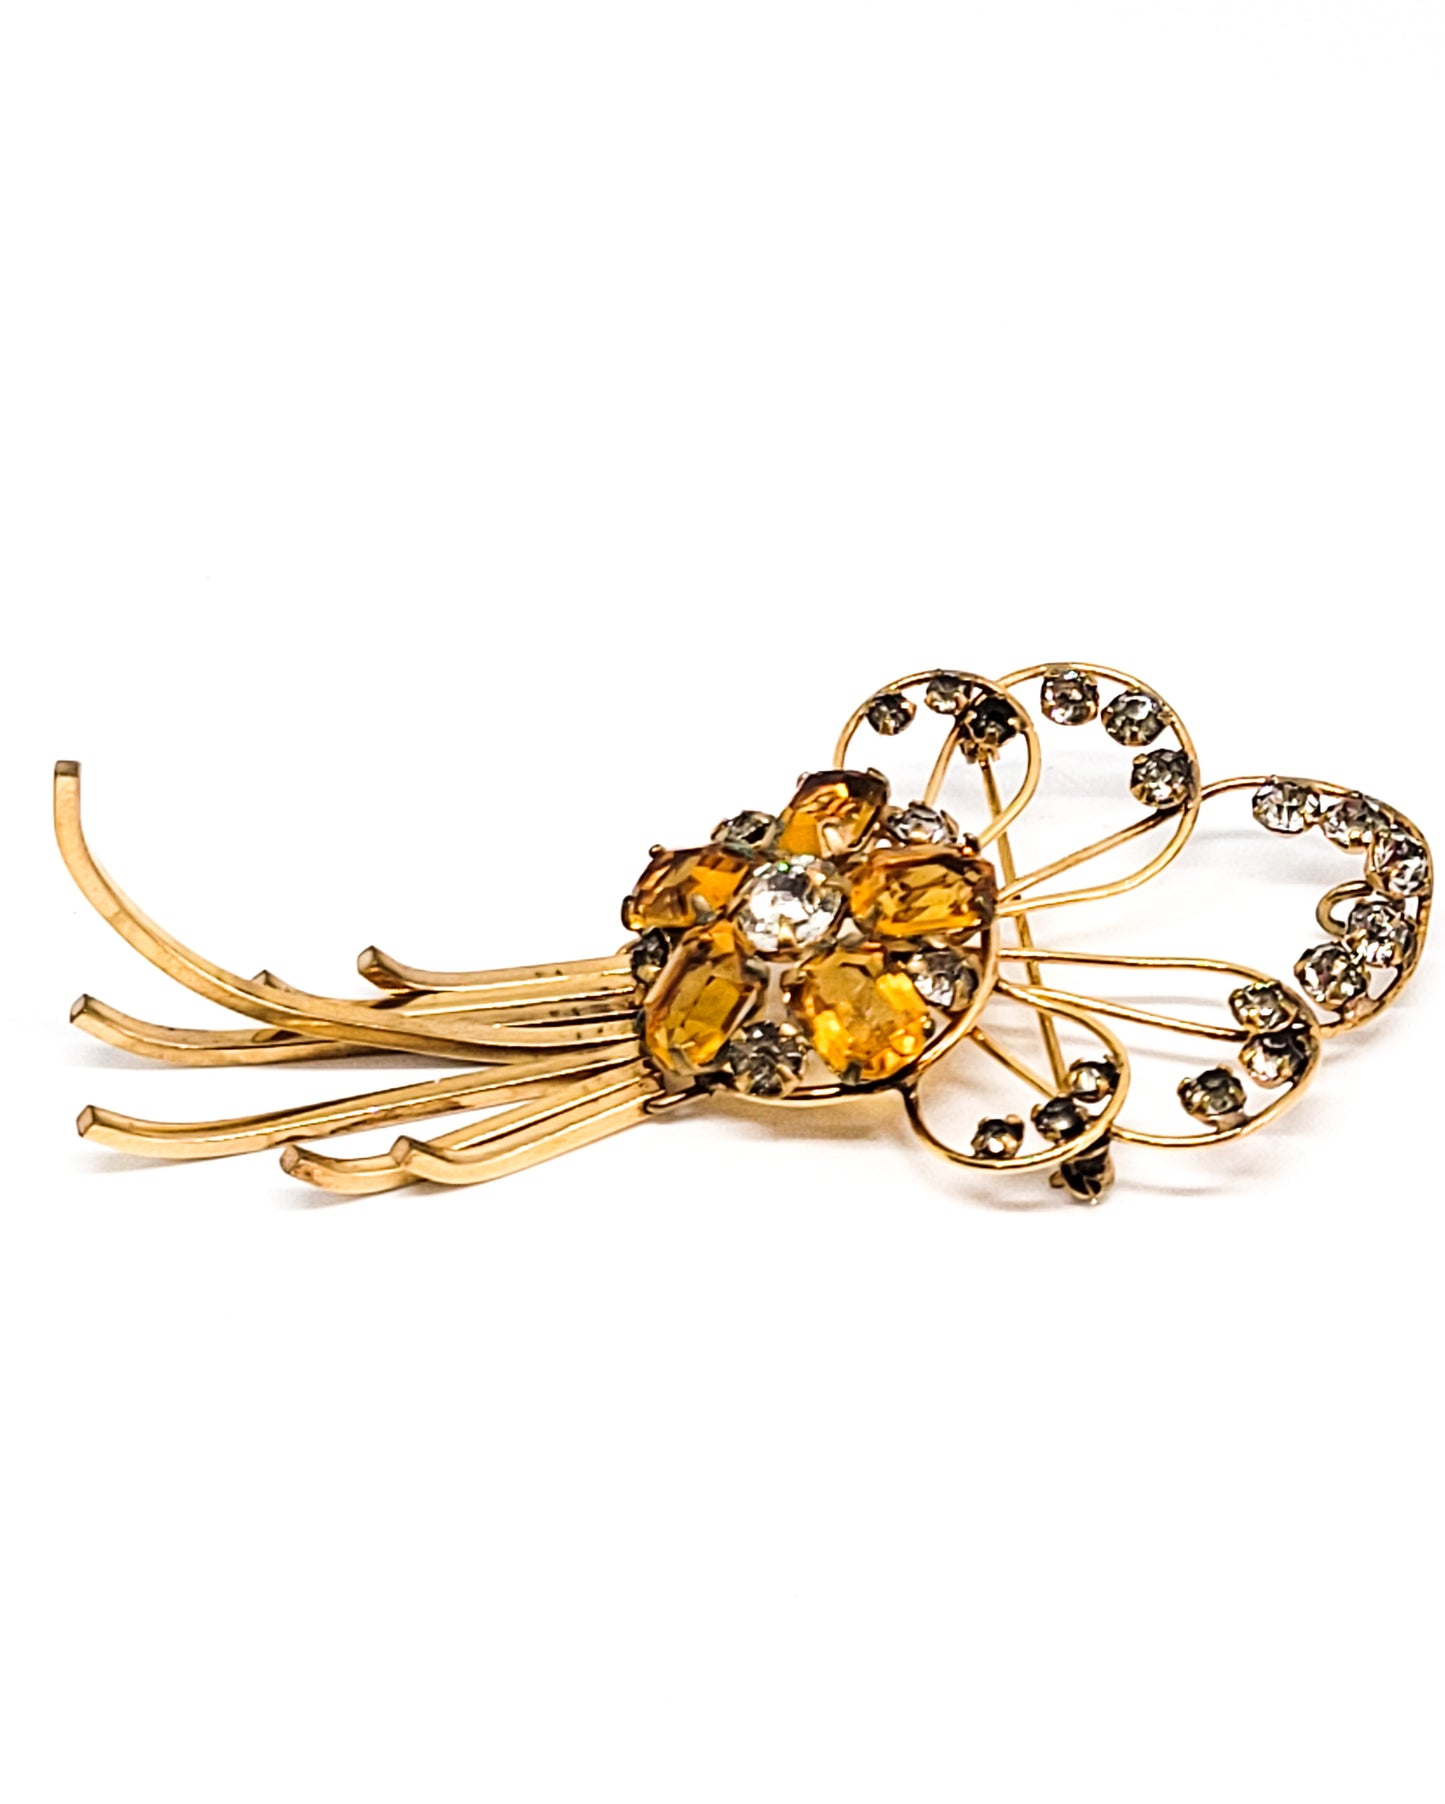 Art Deco Phyllis M&S 1/20 12kt gold filled topaz rhinestone vintage pendant brooch